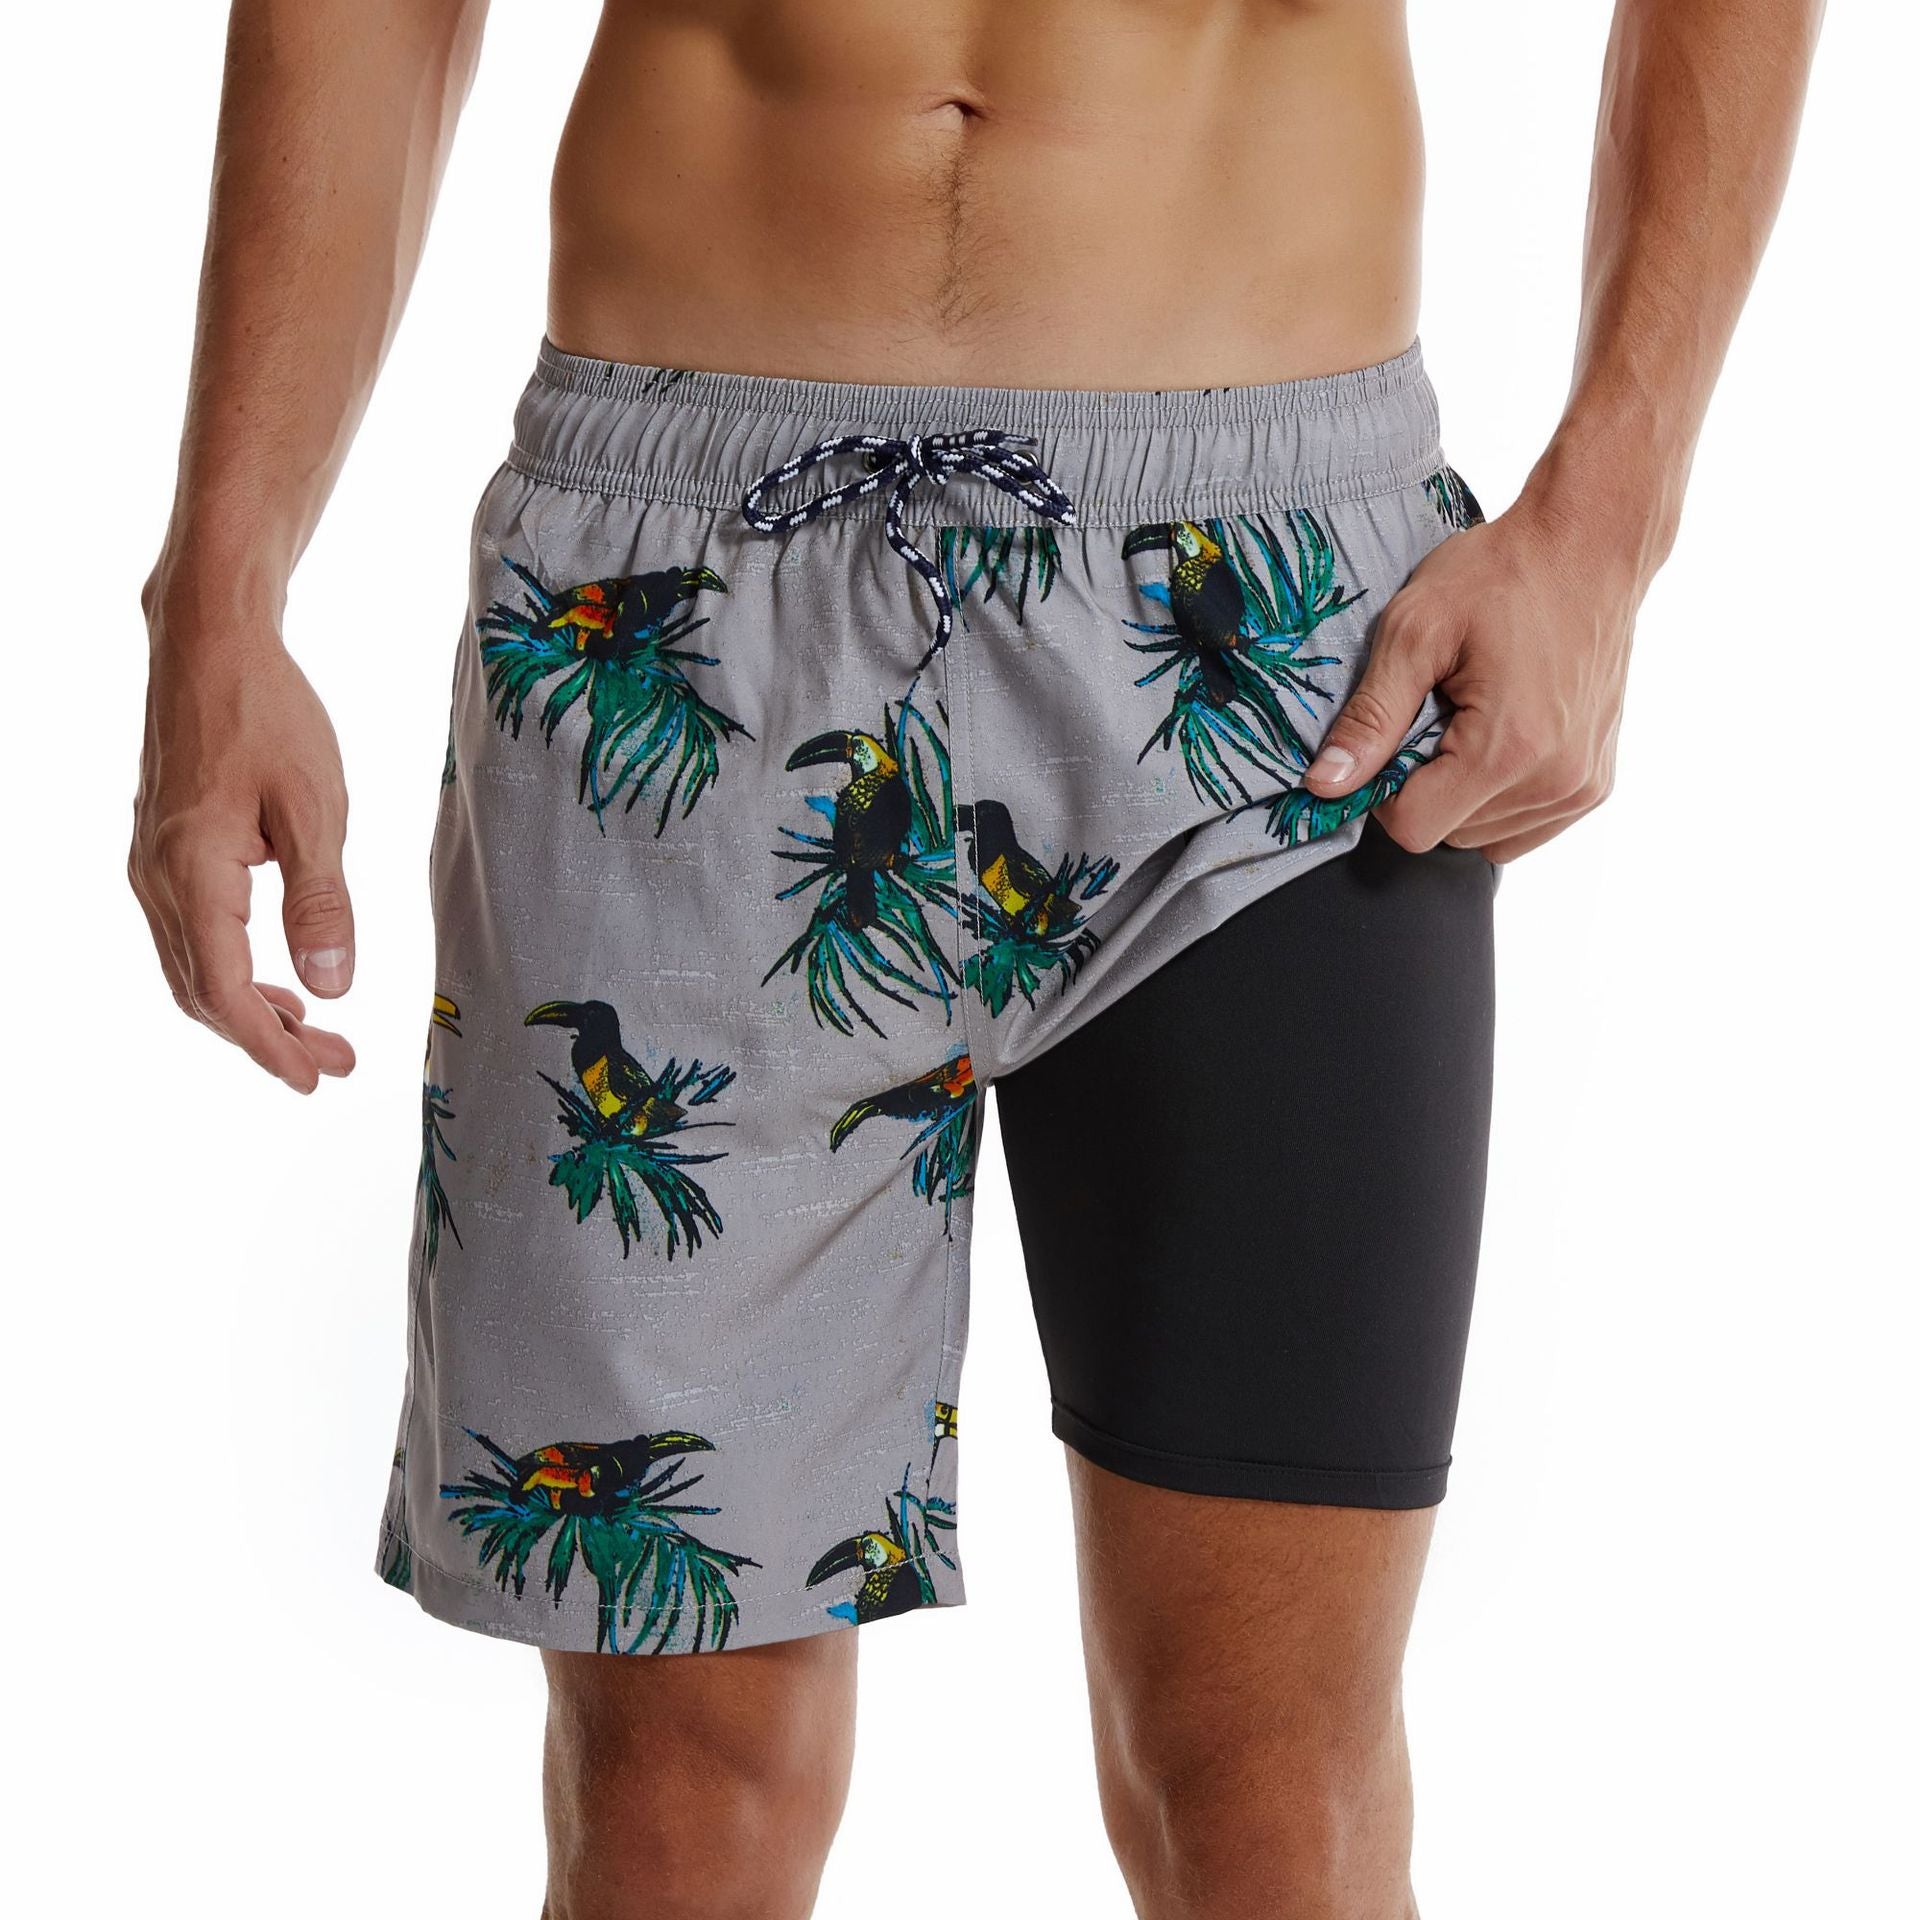 Men's Swim Trunks with Compression Liner Quick Dry 7" Inseam Swimsuit Swimwear - Toucans